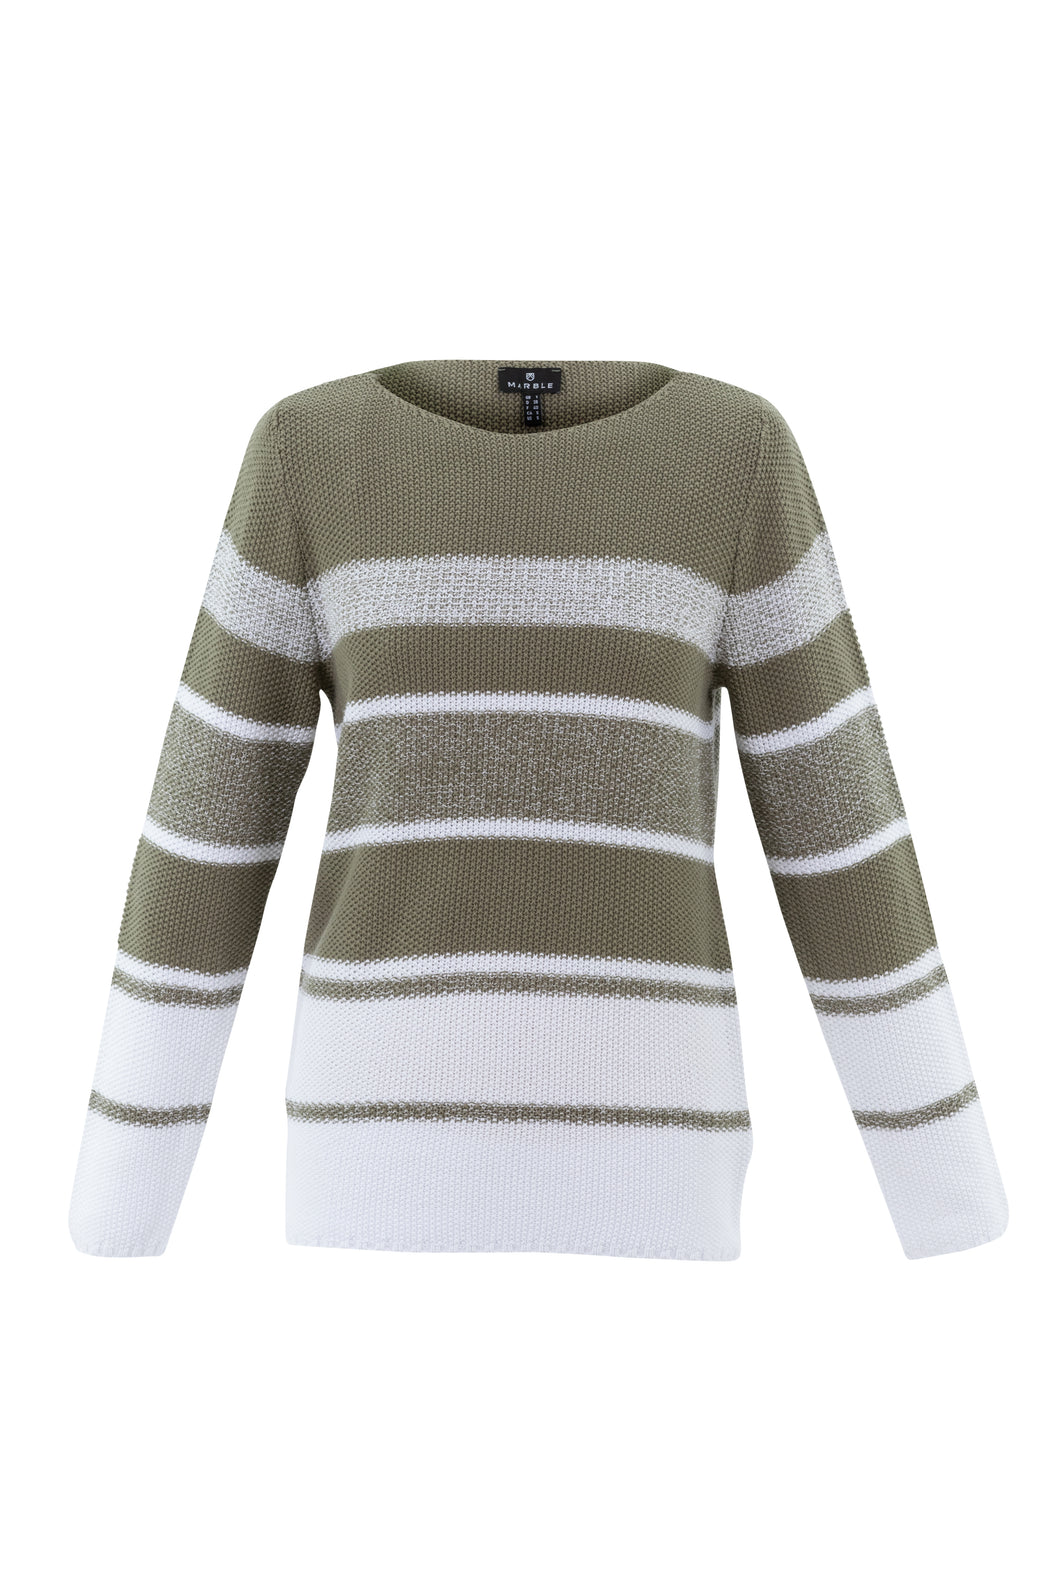 Marble - Khaki stripe jumper